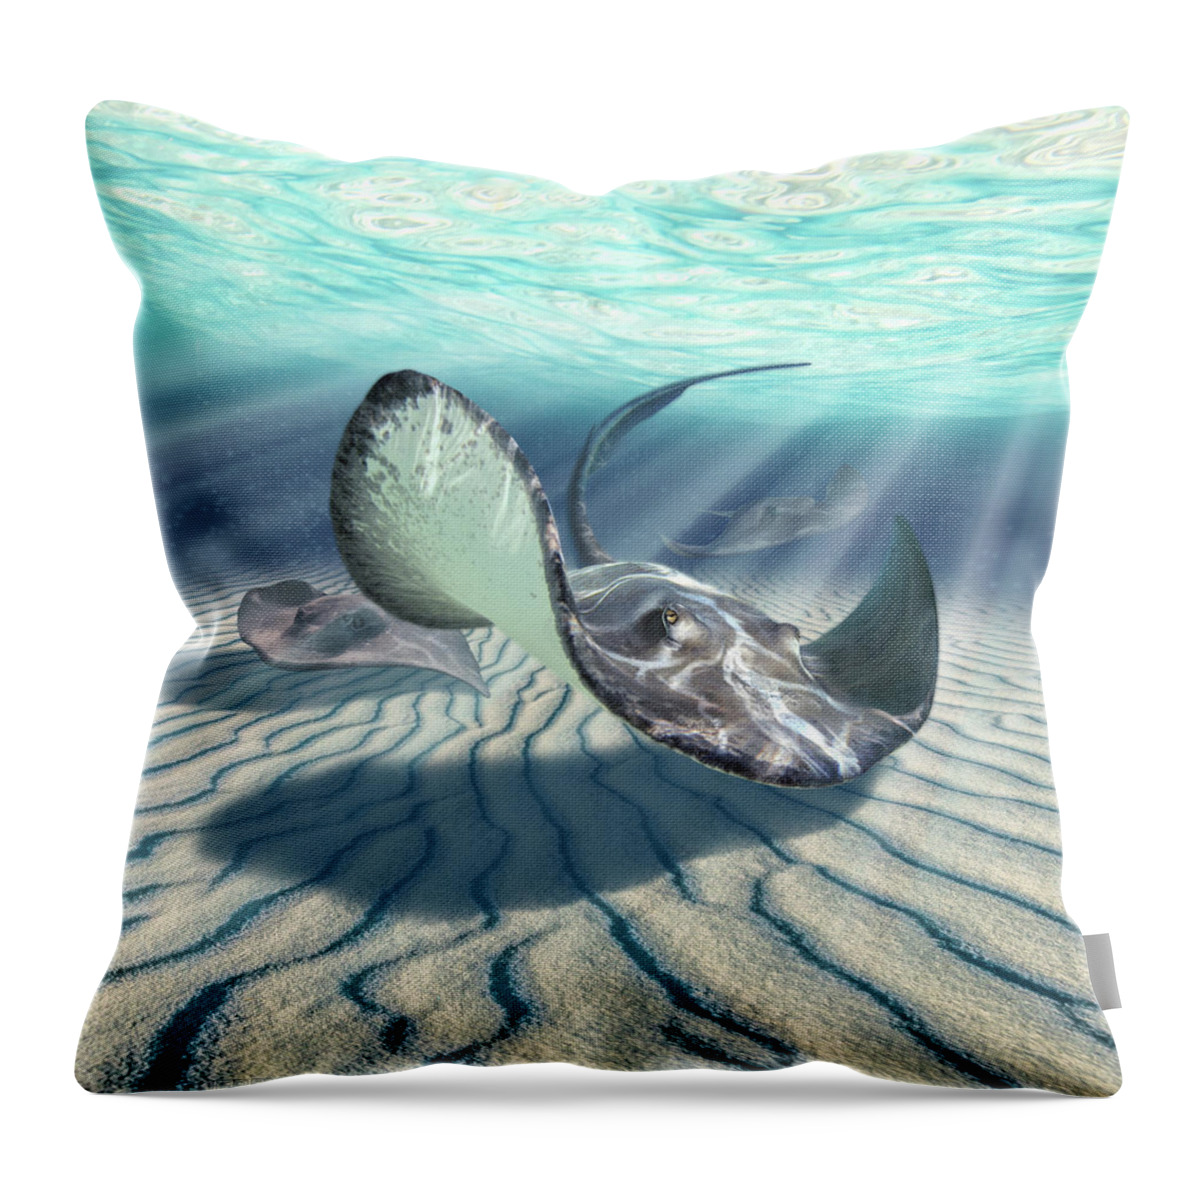 Stingrays Throw Pillow featuring the digital art Stingrays by Jerry LoFaro